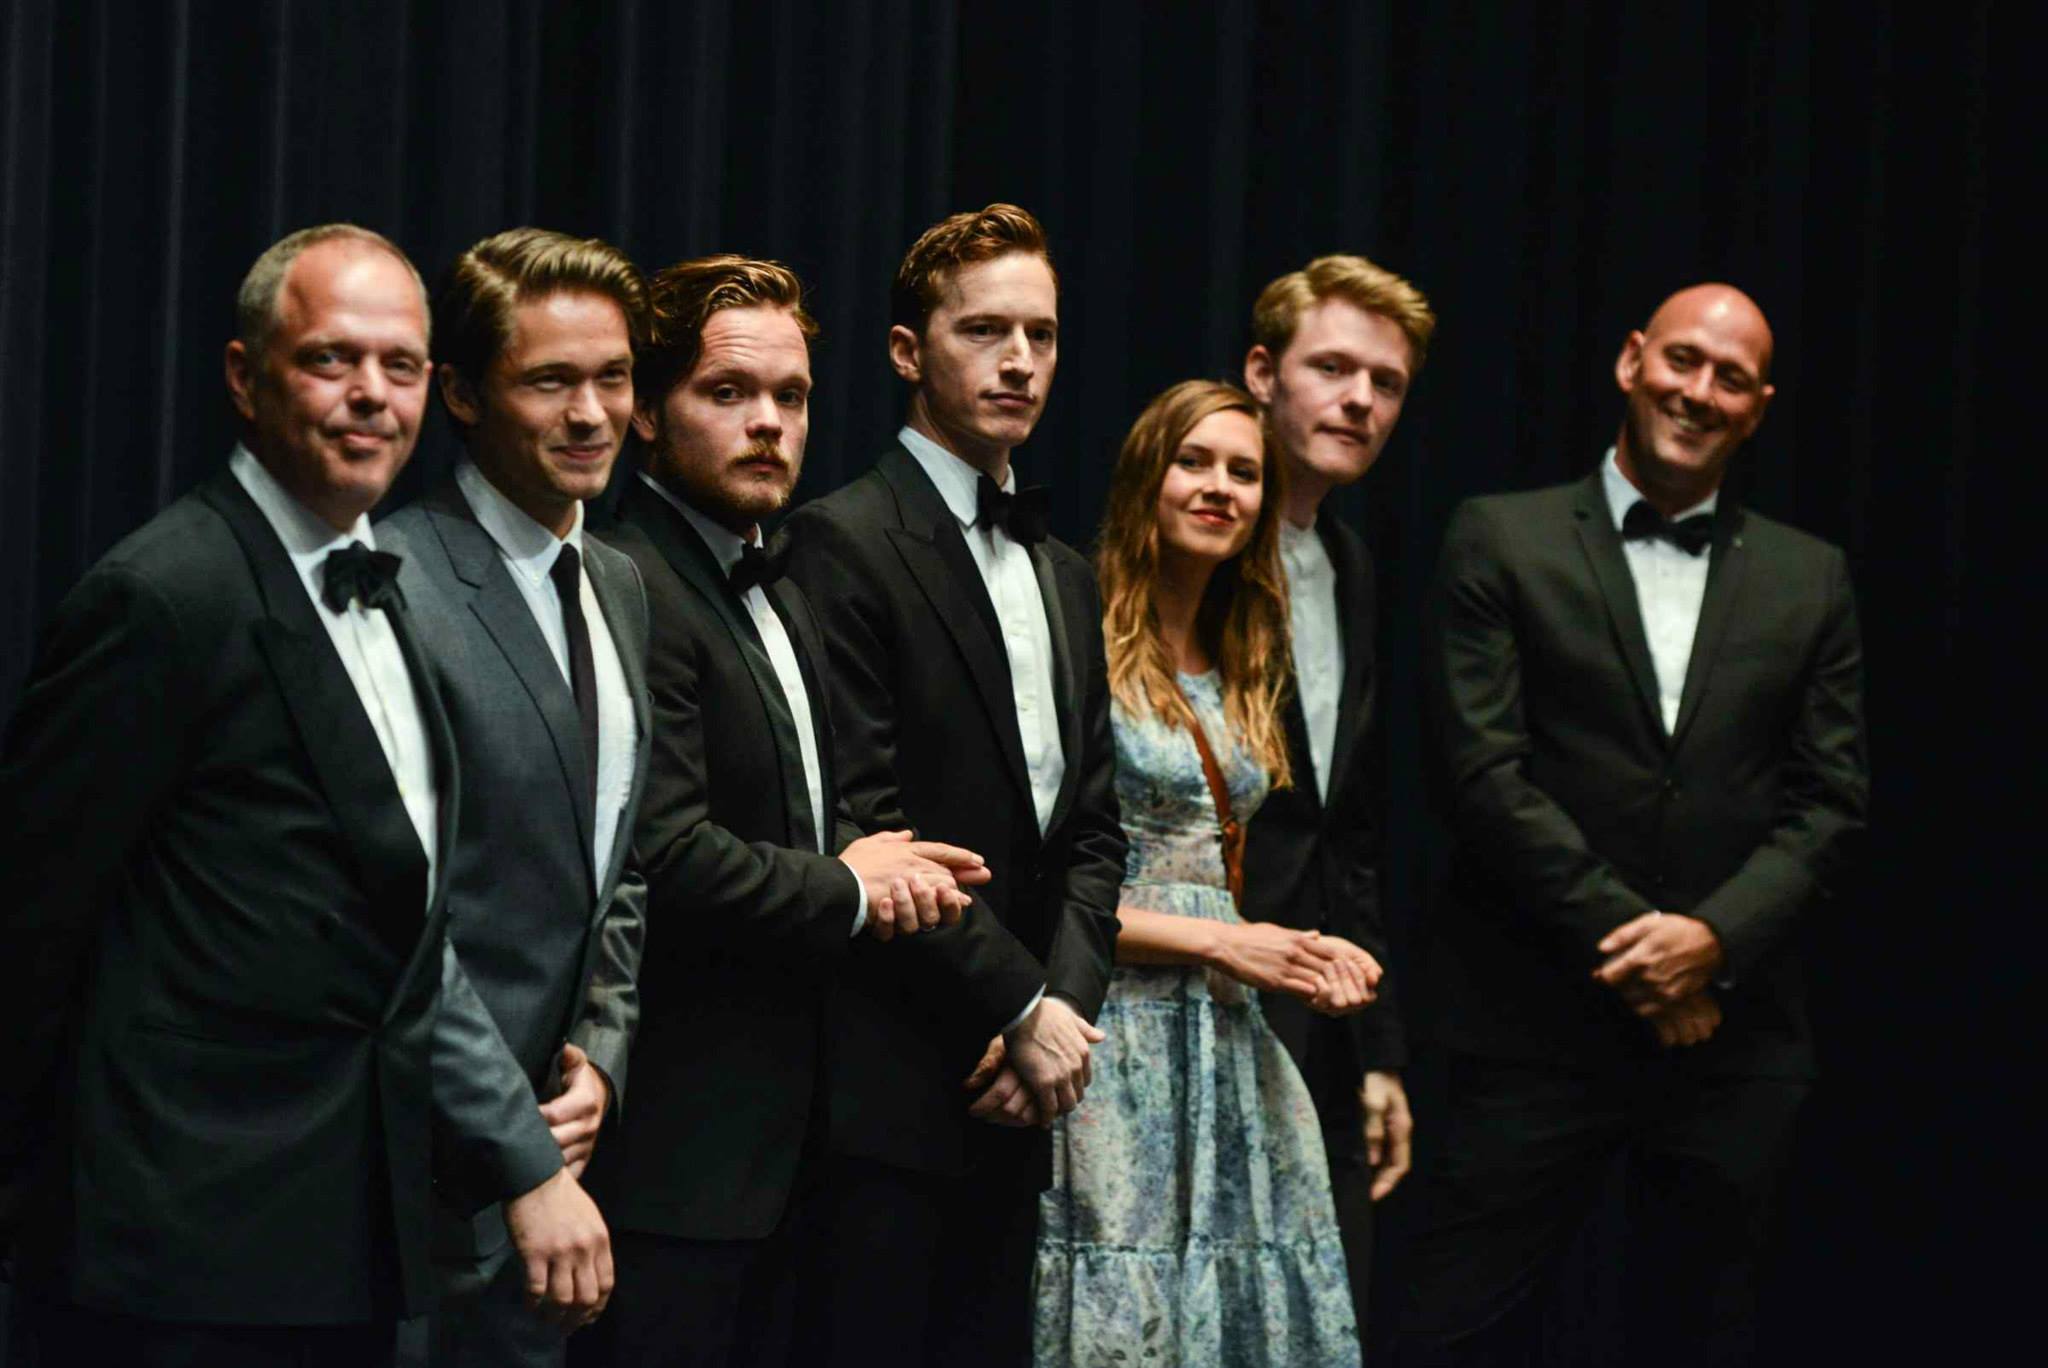 International premier of Gold Coast at Karlovy Vary International Film Festival 2015 main competition.